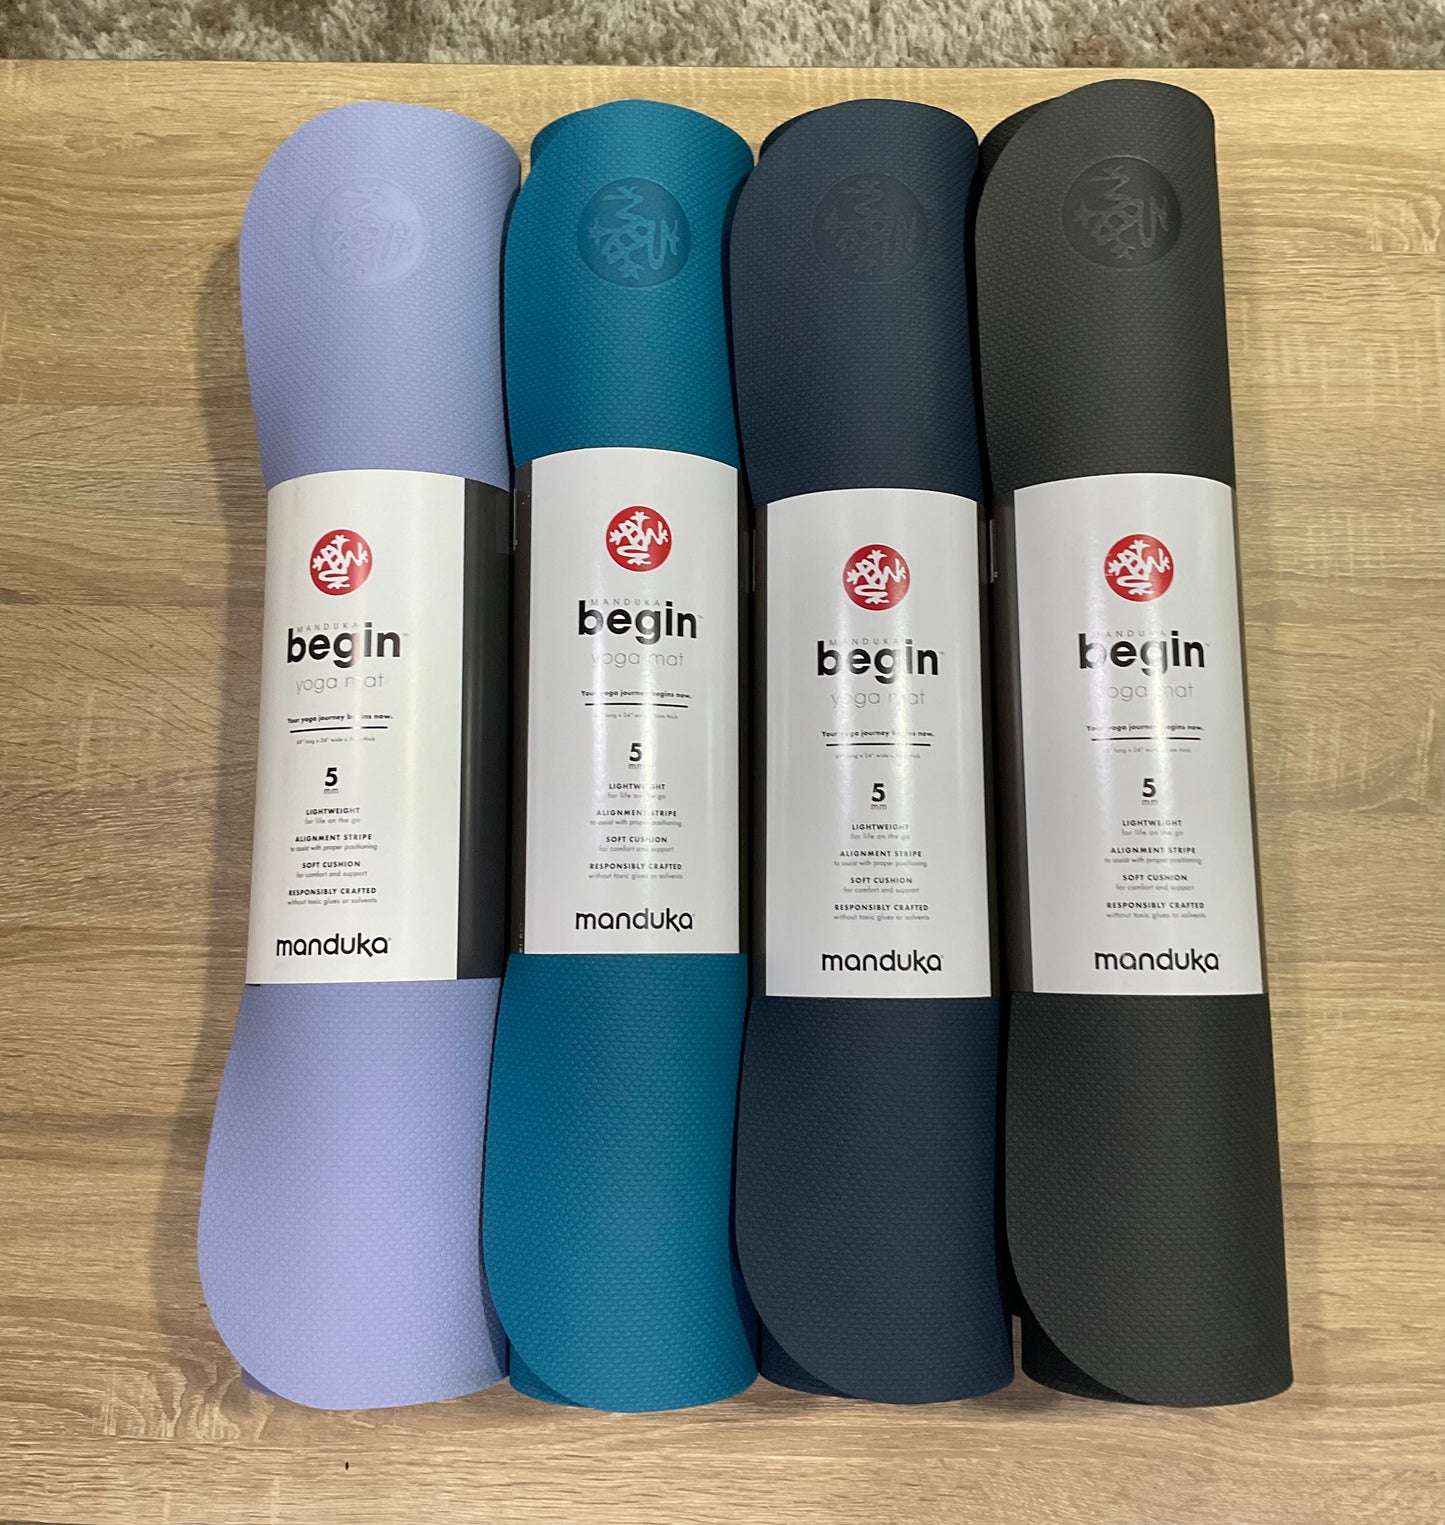 Manduka Begin Yoga Mat 5mm - Lavender Fig – Soulcielite